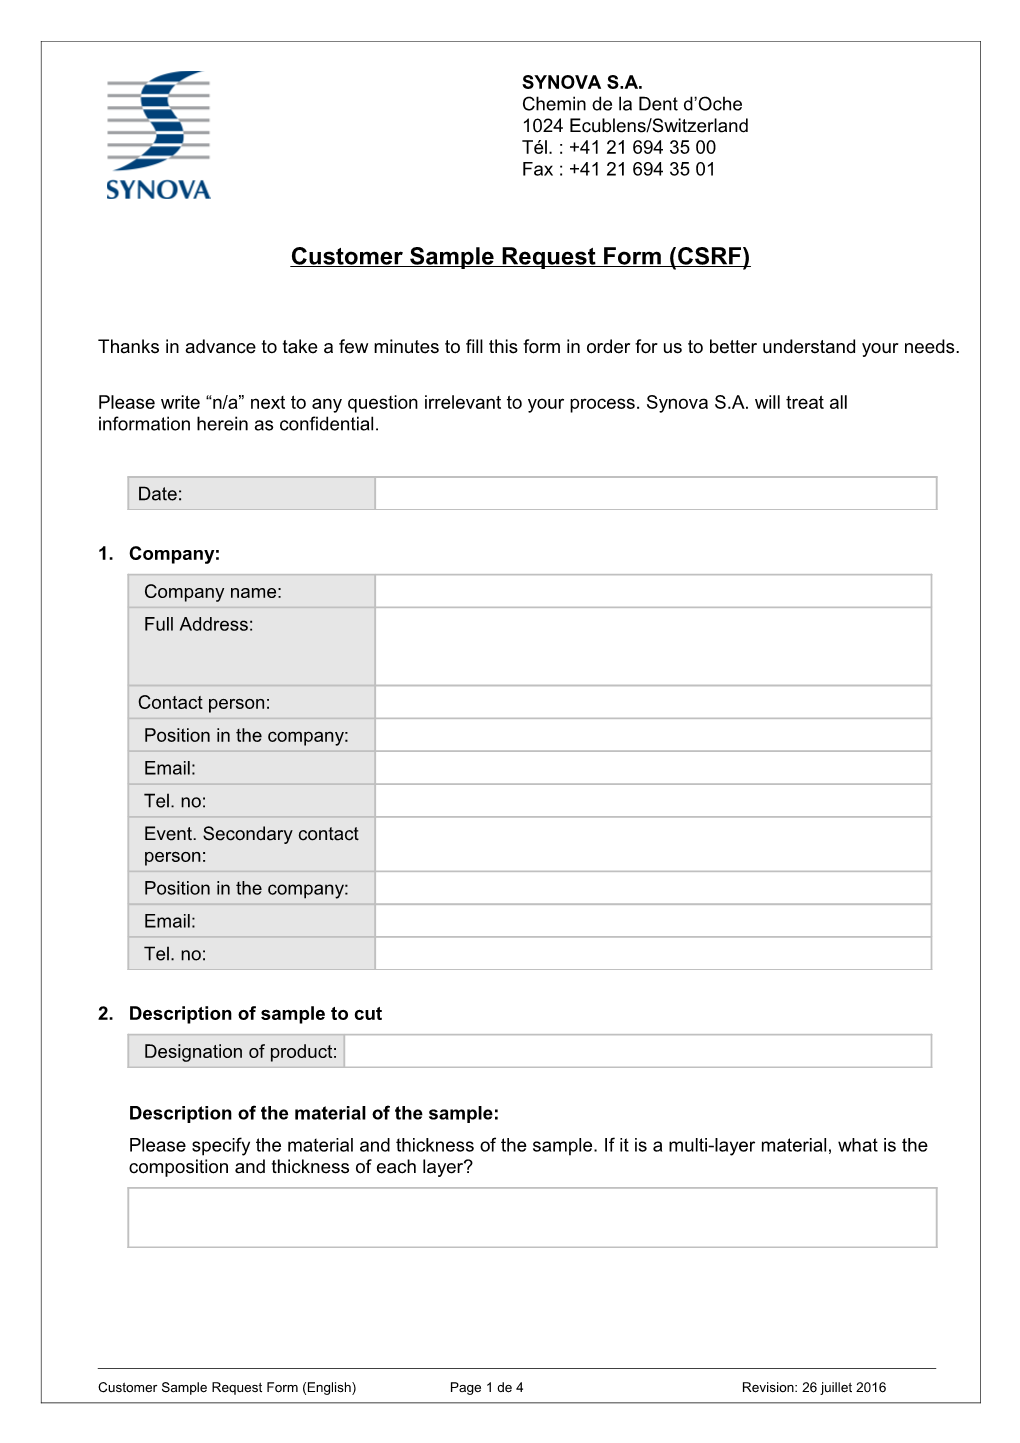 Customer Sample Request Form (CSRF)